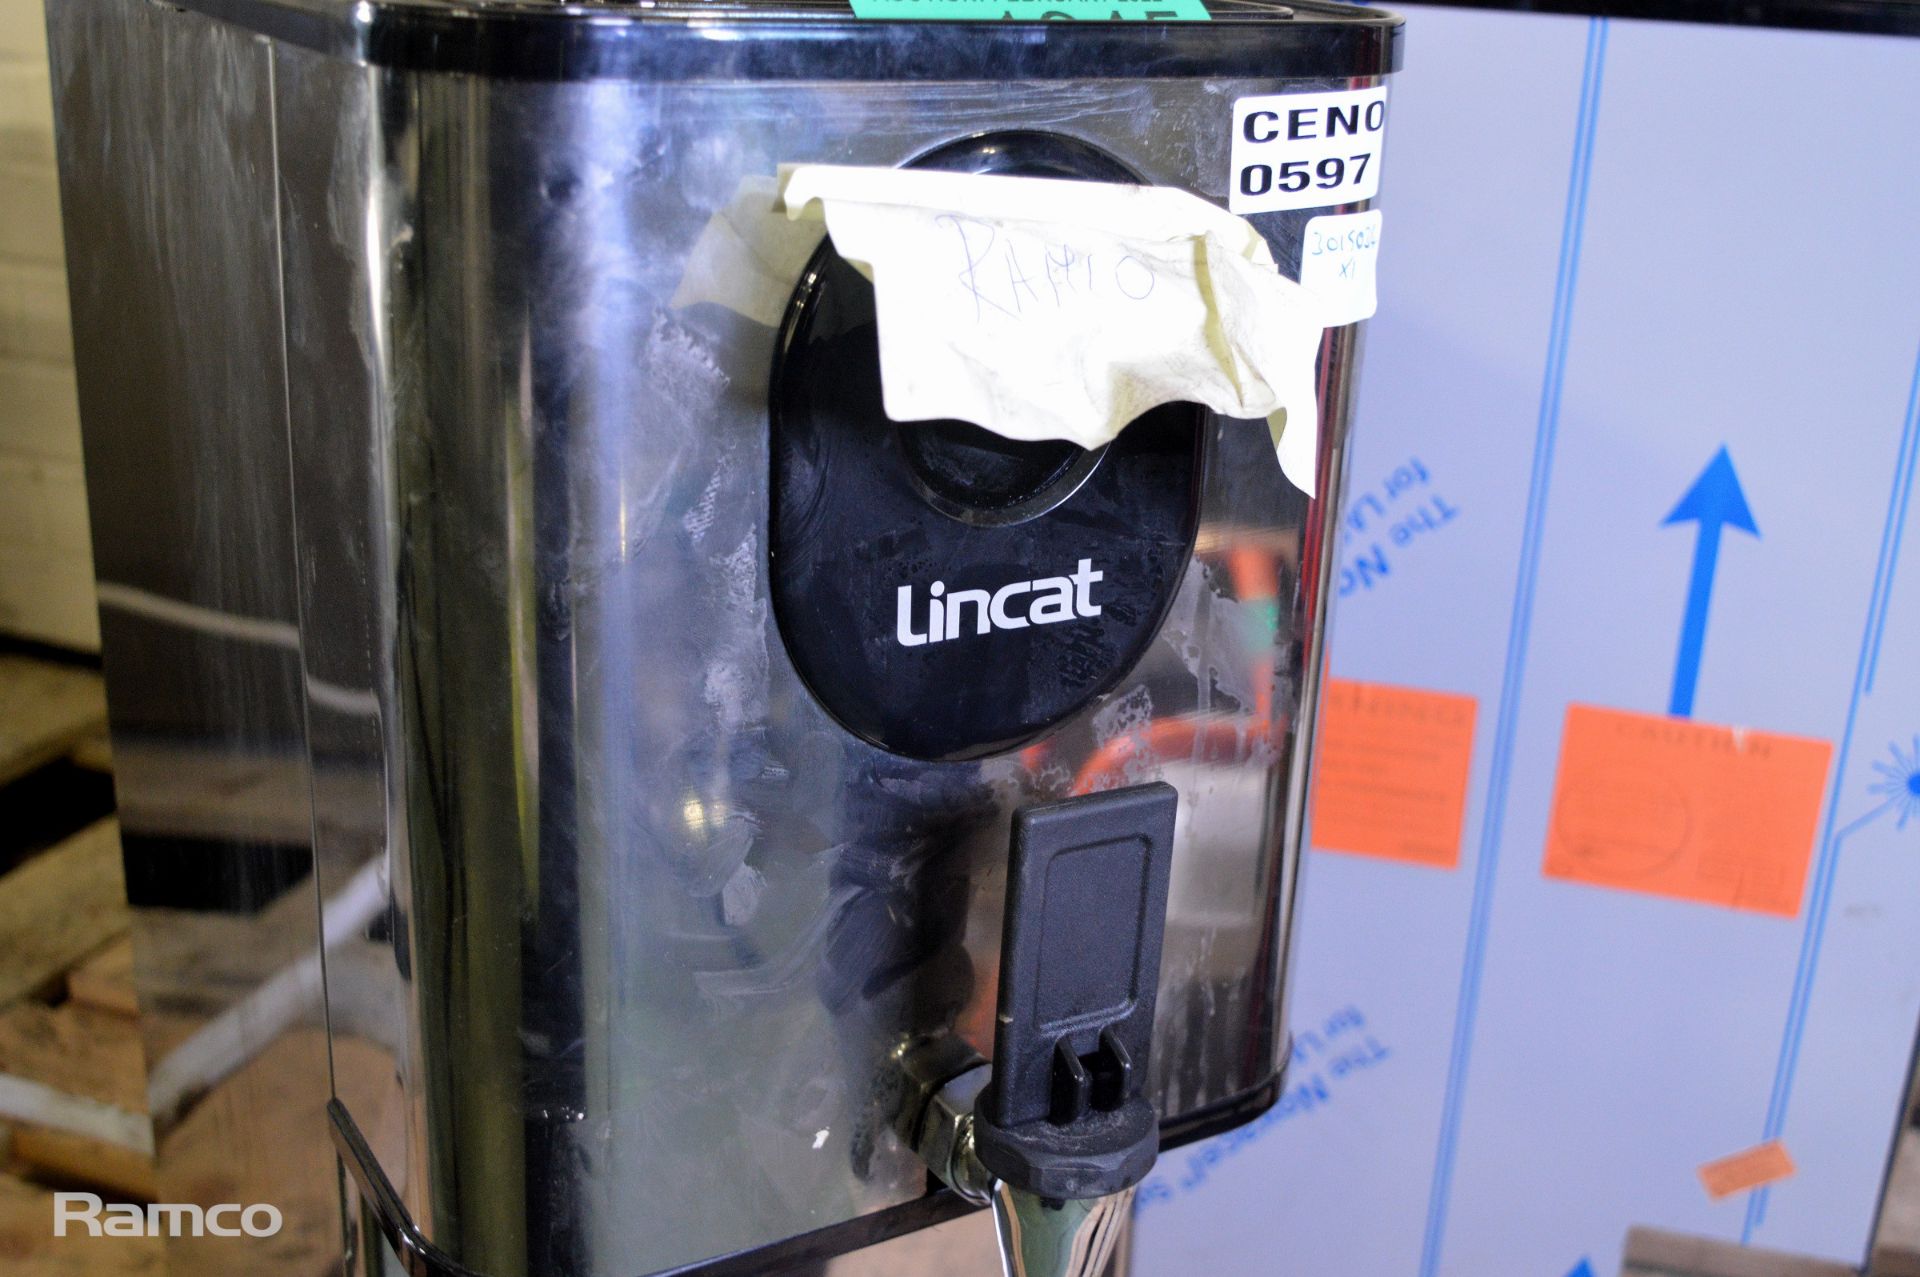 Lincat Tap Lever Water Boiler Dispenser - L 530mm x W 250mm x H 600mm - Image 2 of 3